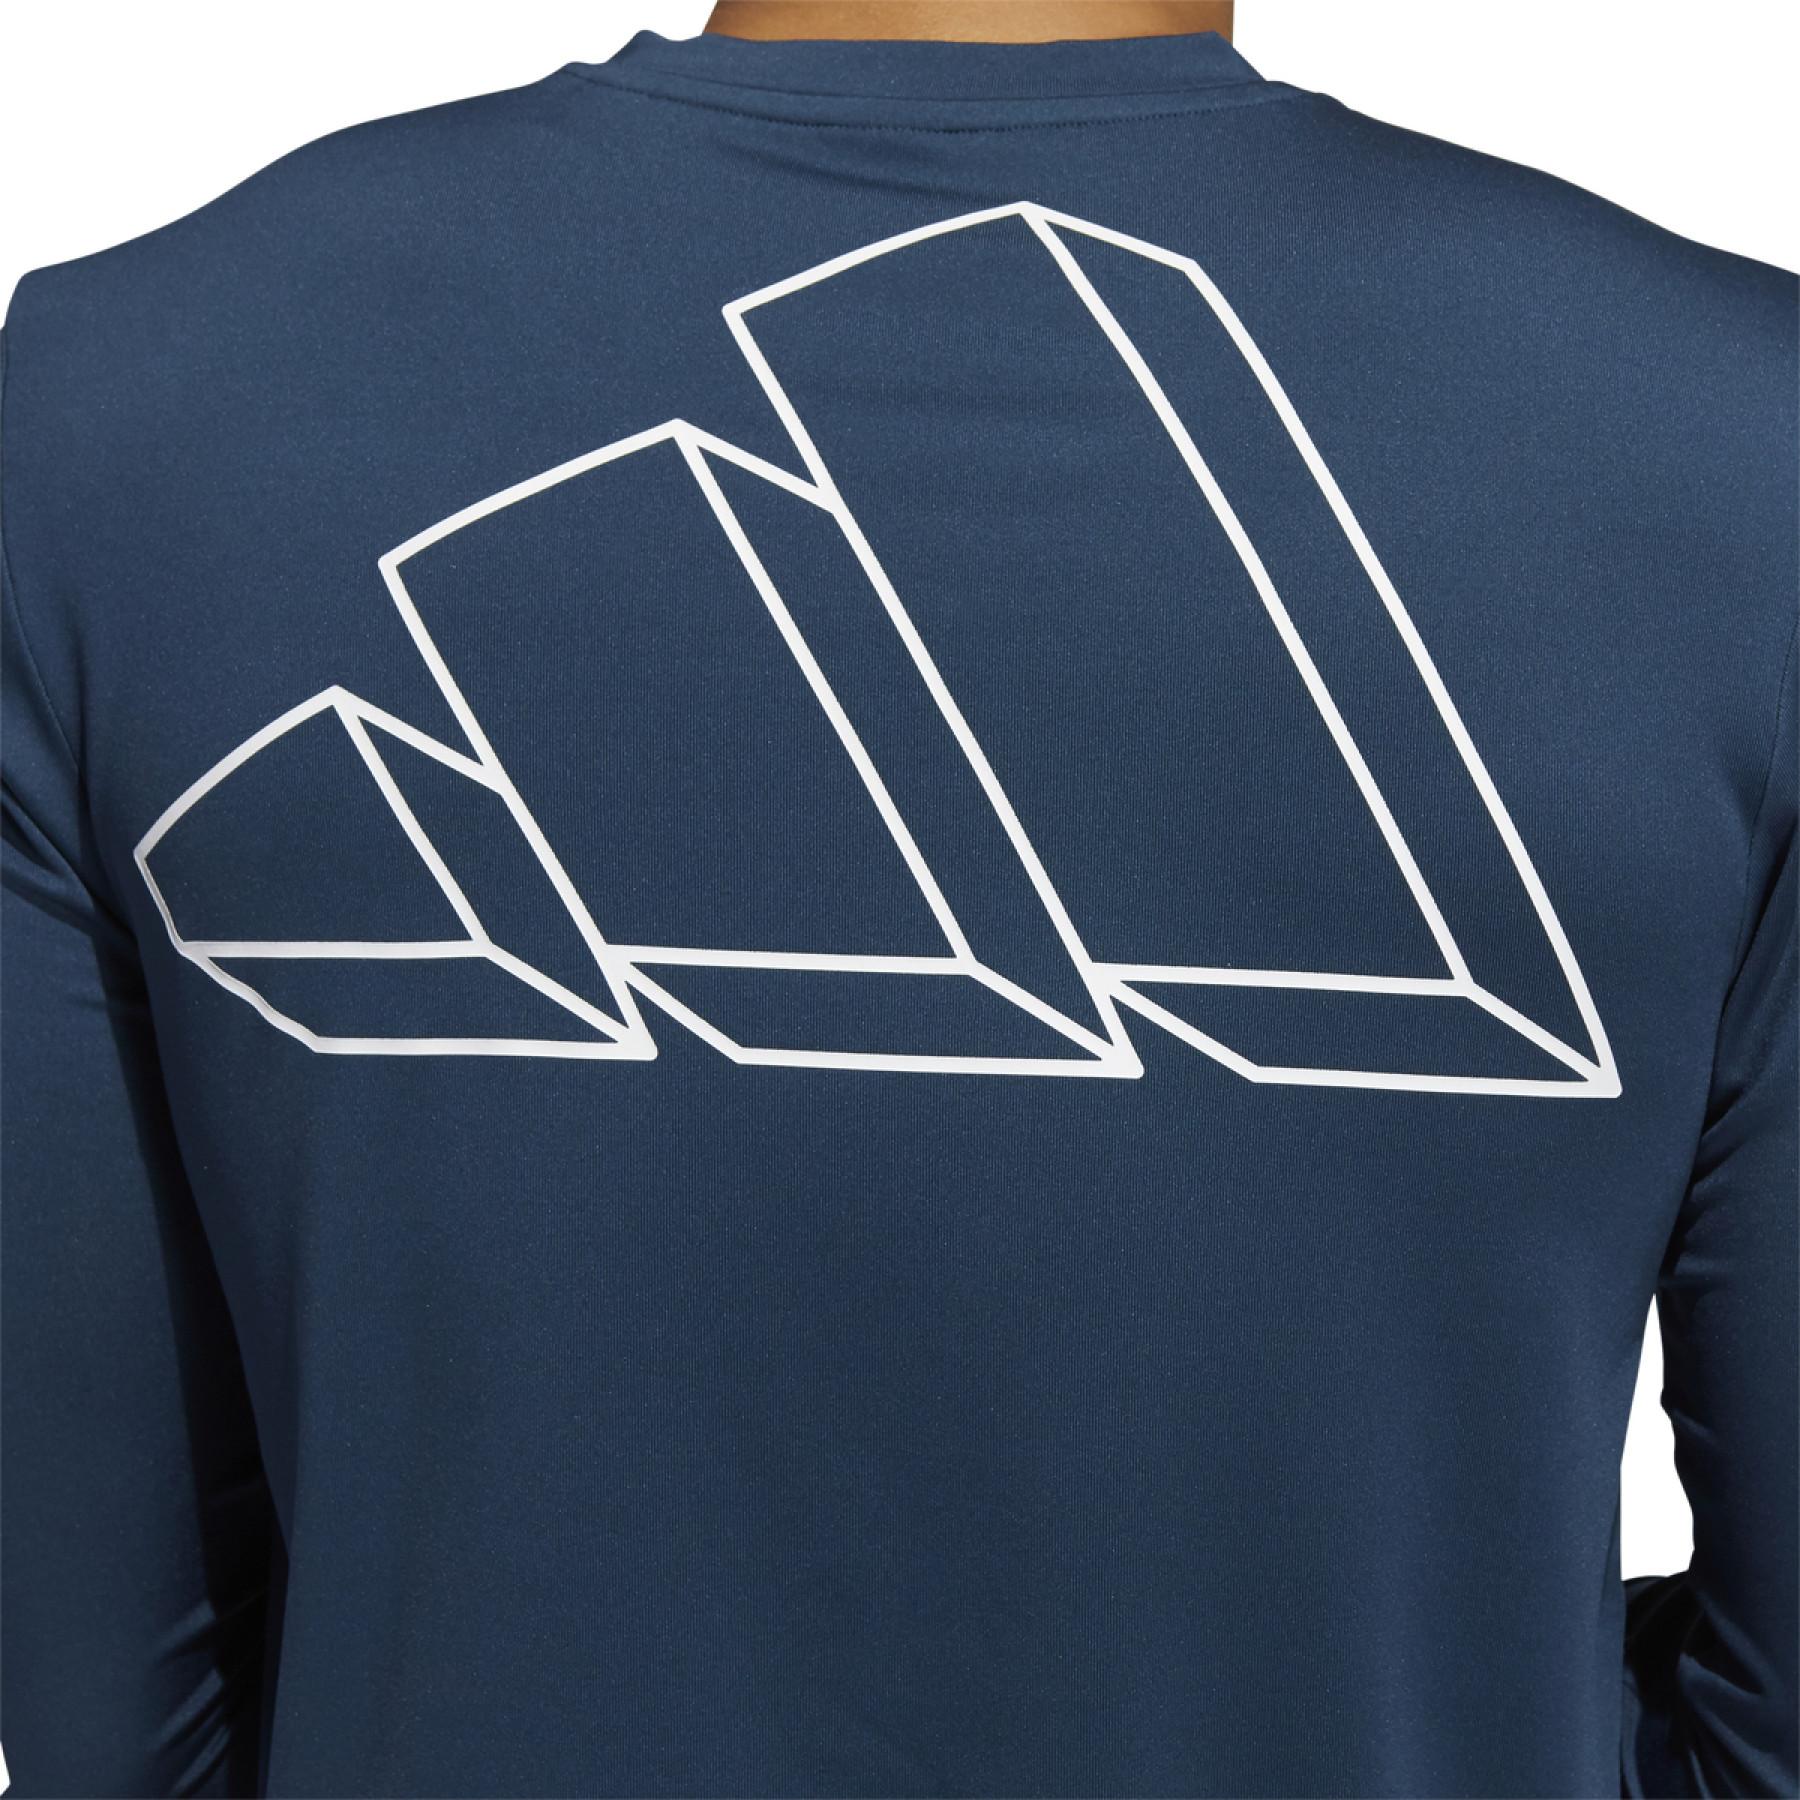 Long sleeve T-shirt adidas FB Hype